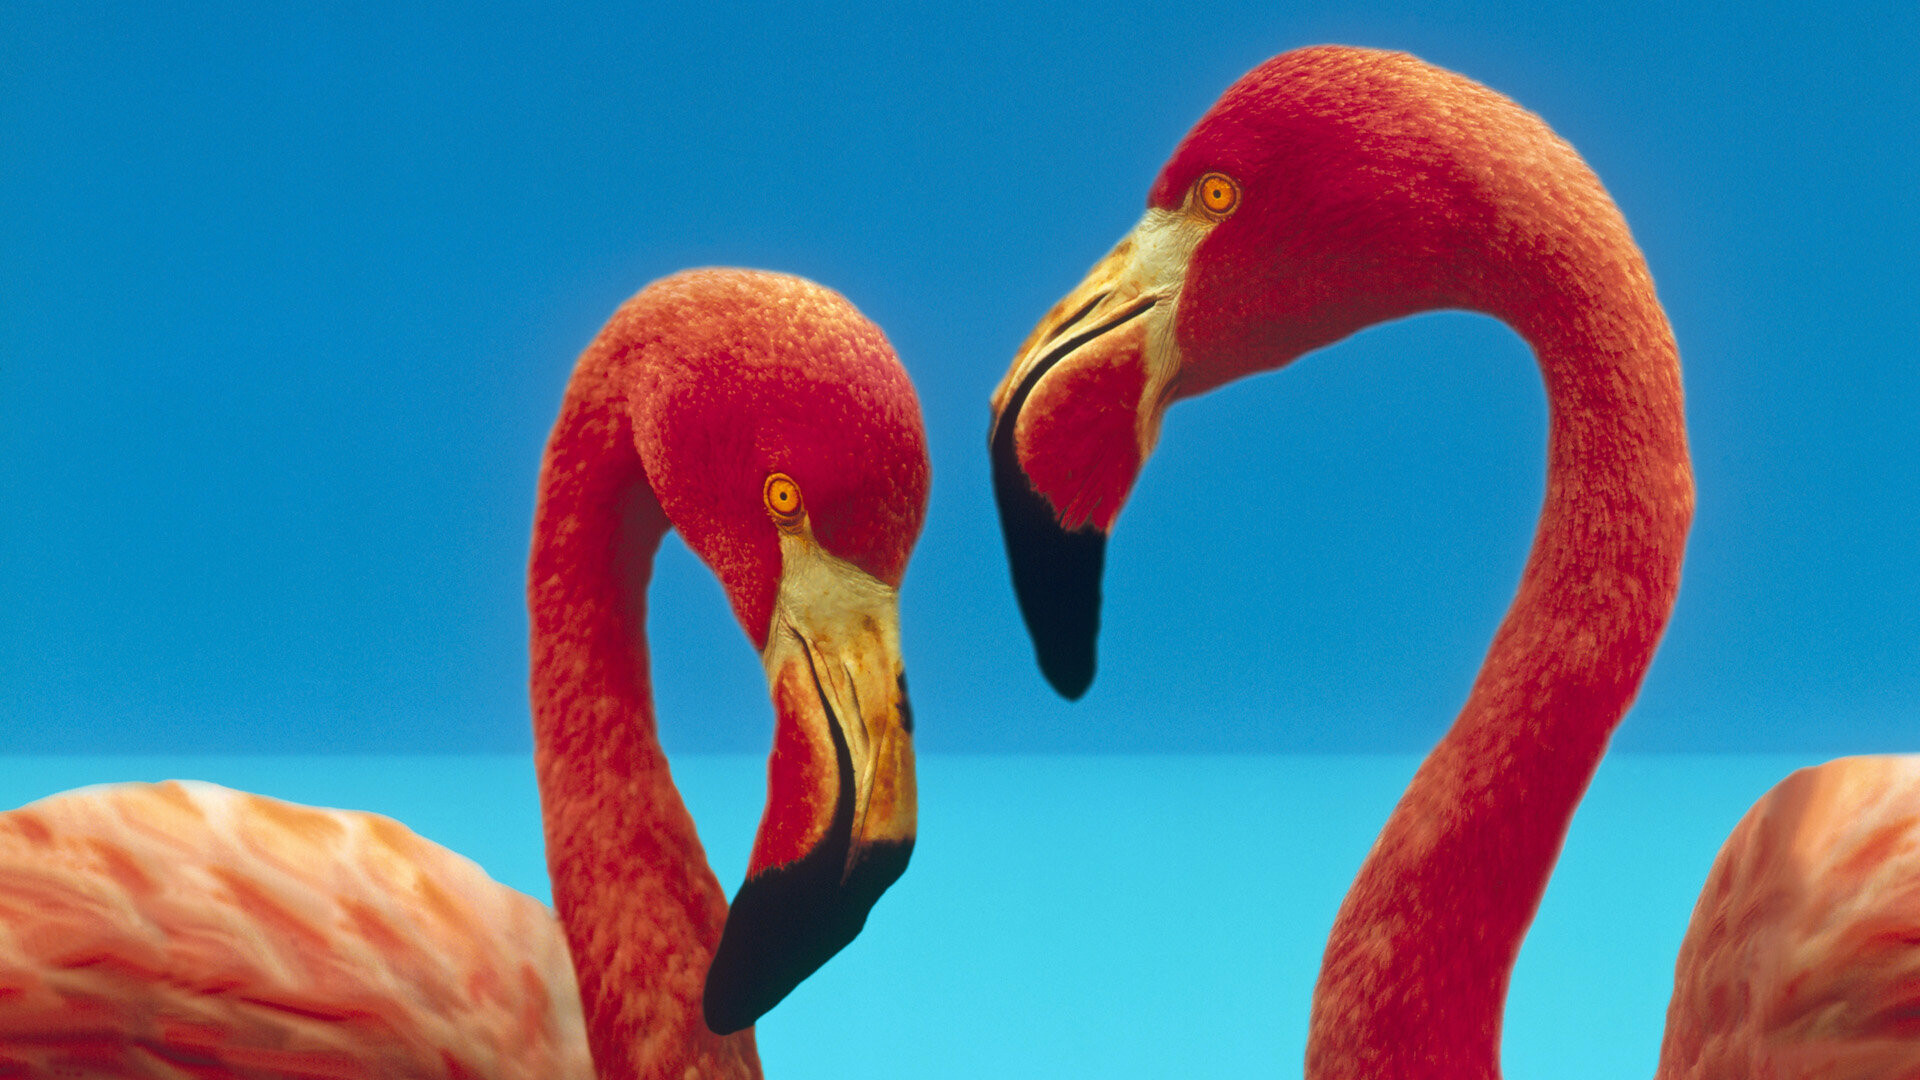 Flamingo: A wading bird of the family Phoenicopteridae, Aquatic birds. 1920x1080 Full HD Wallpaper.